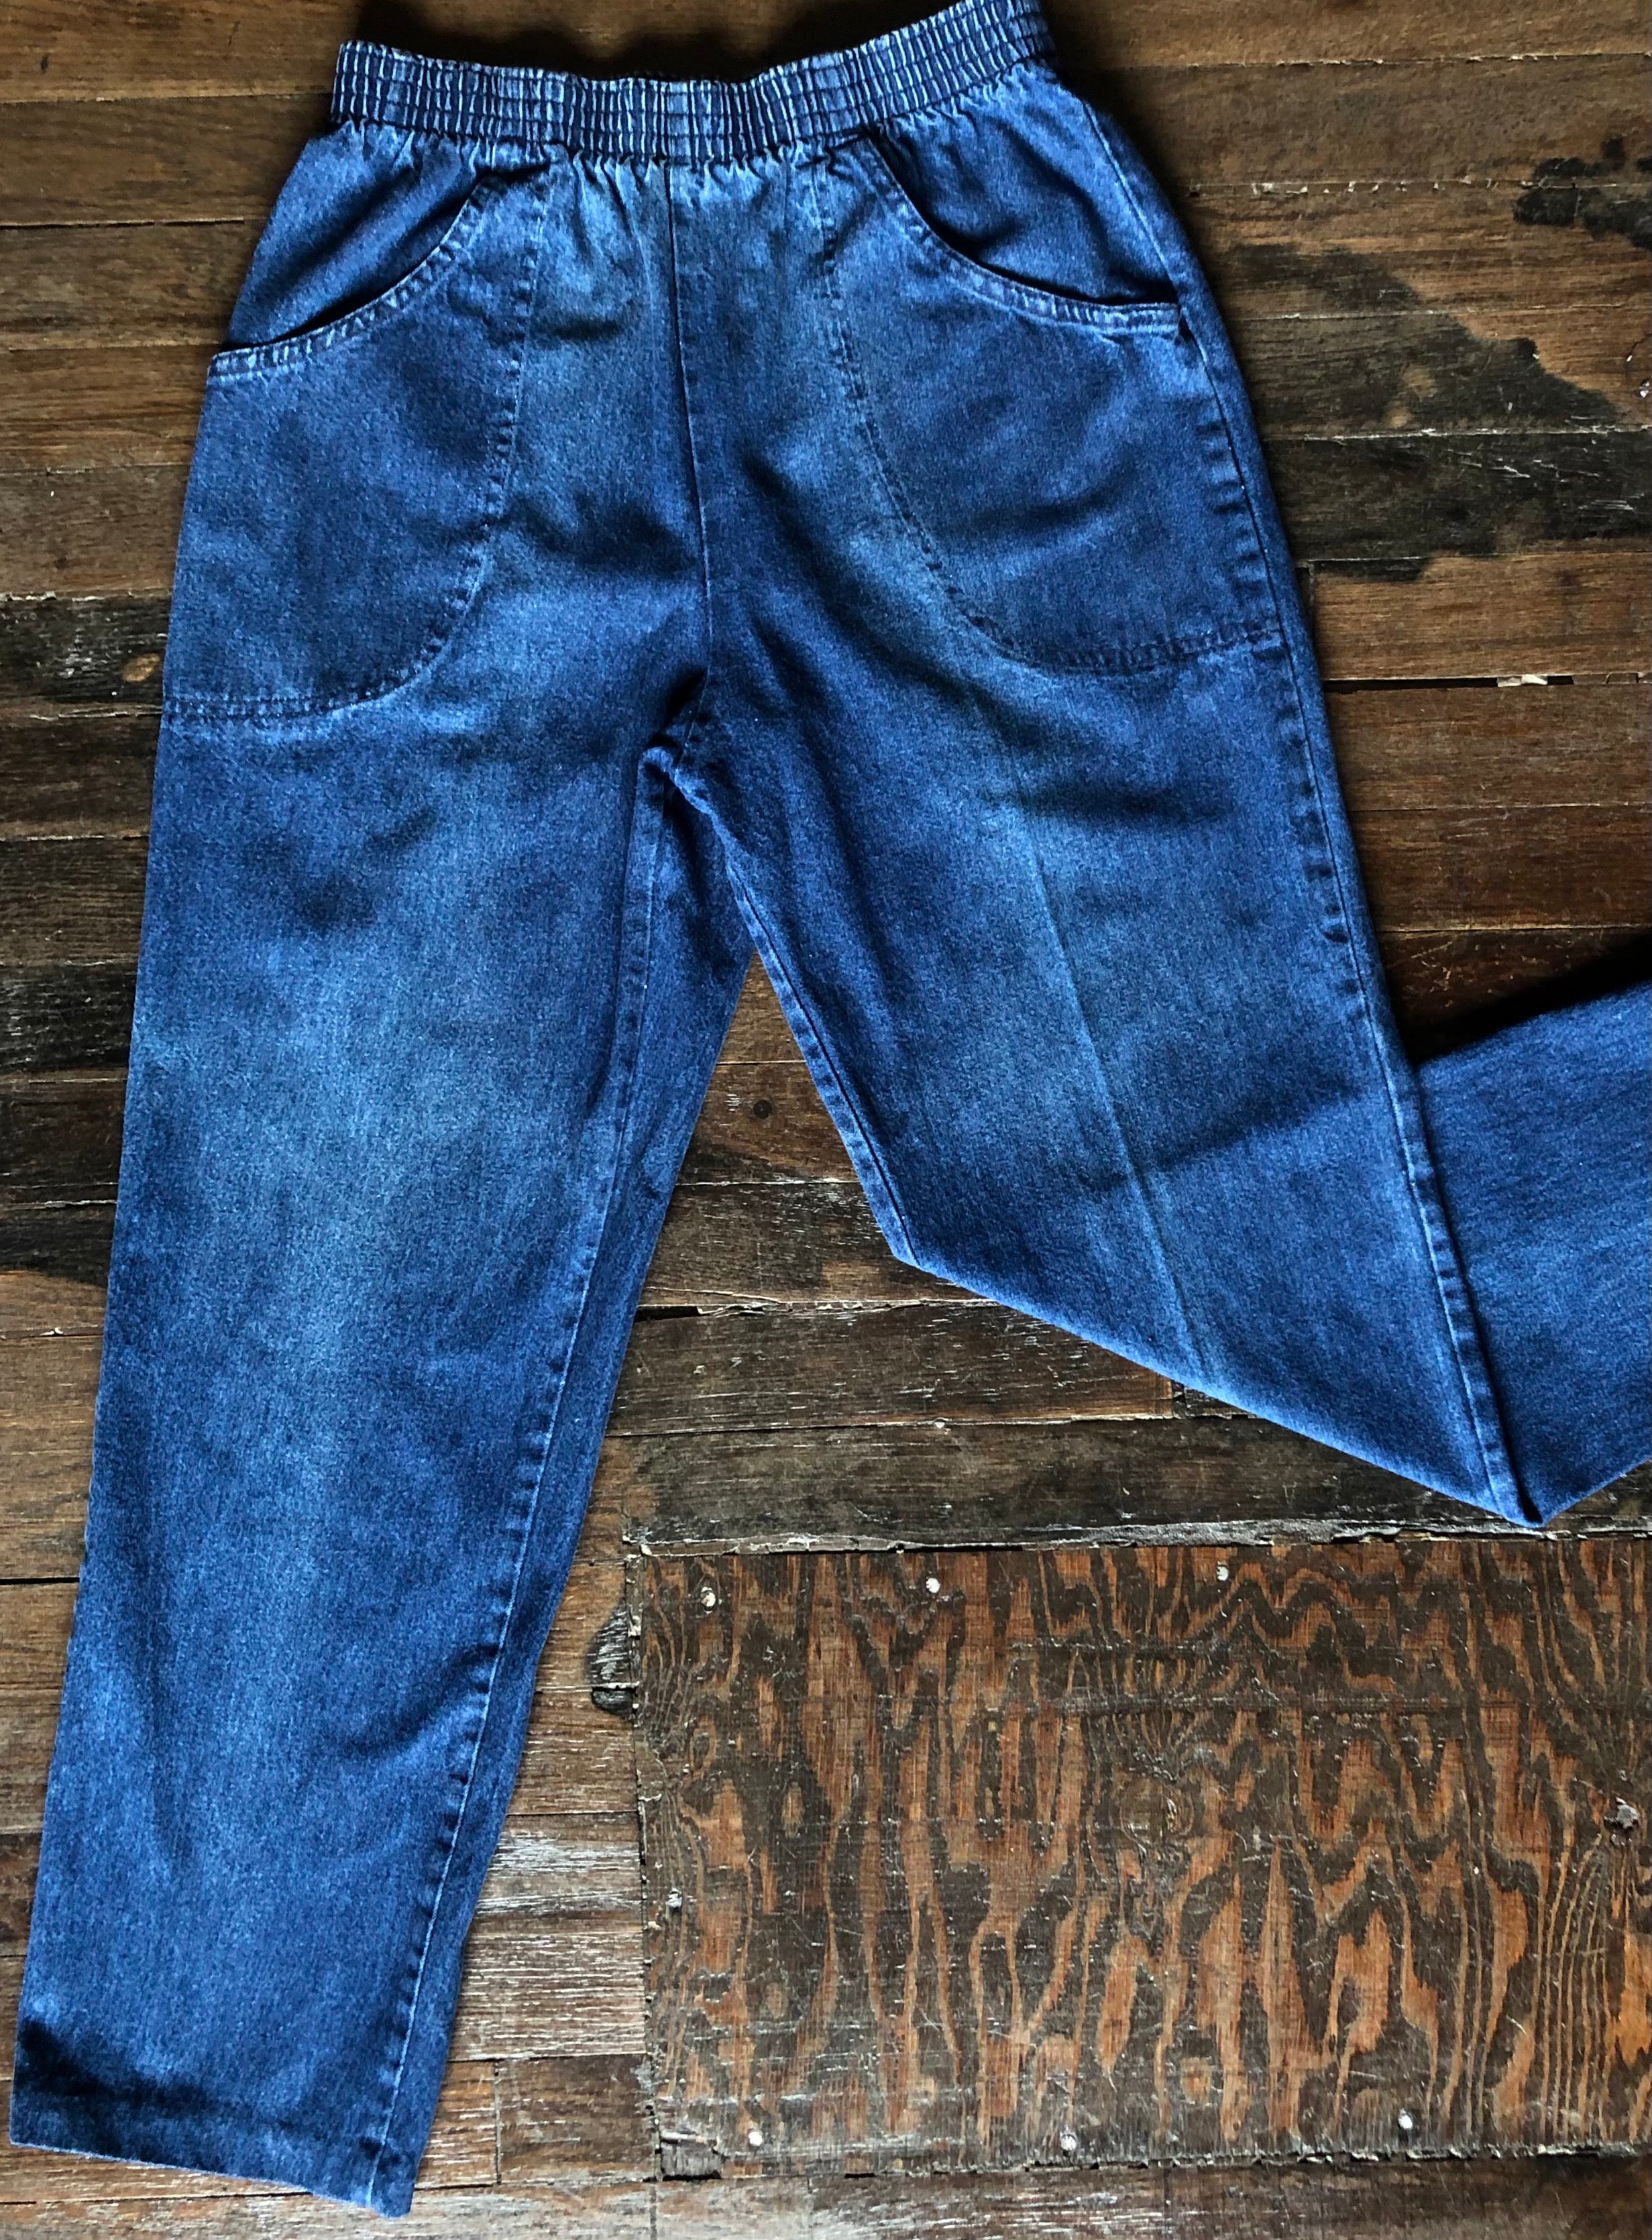 Vintage Sag Harbor High Waist Denim Jeans  S/M